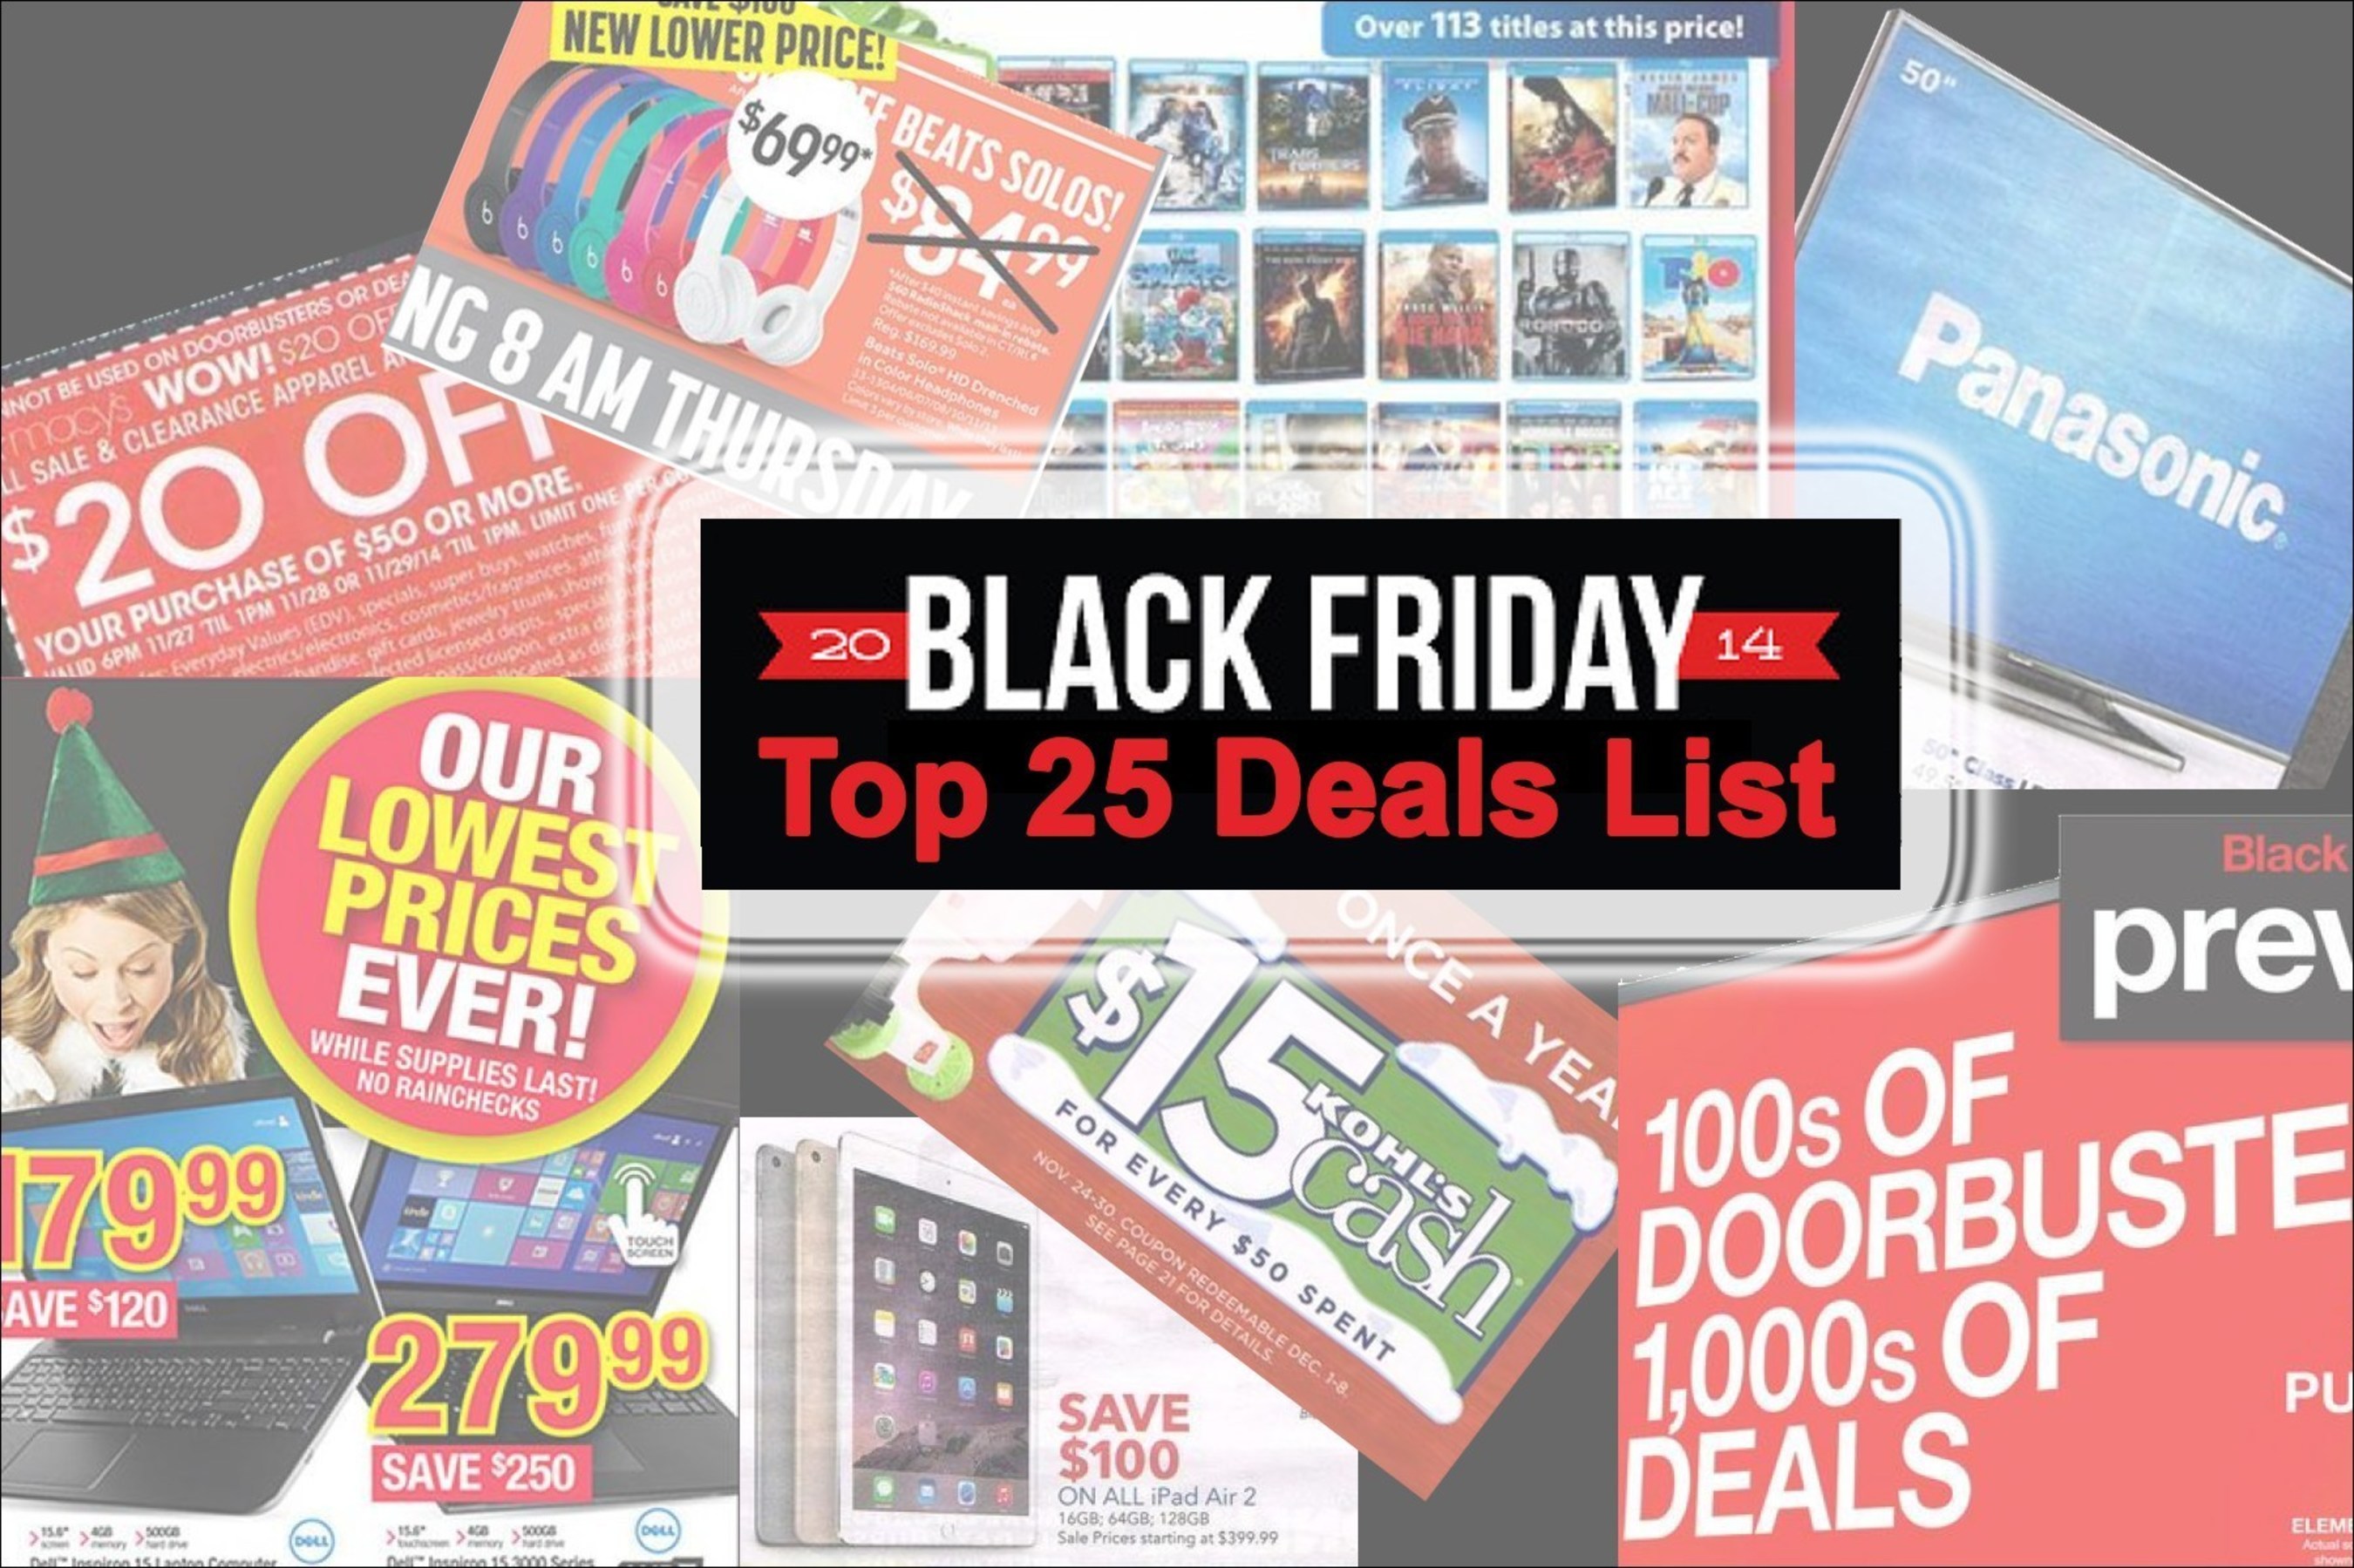 "Good-Better-Best" List of Black Friday Deals from FatWallet.com - When To Find Better Deals Black Friday